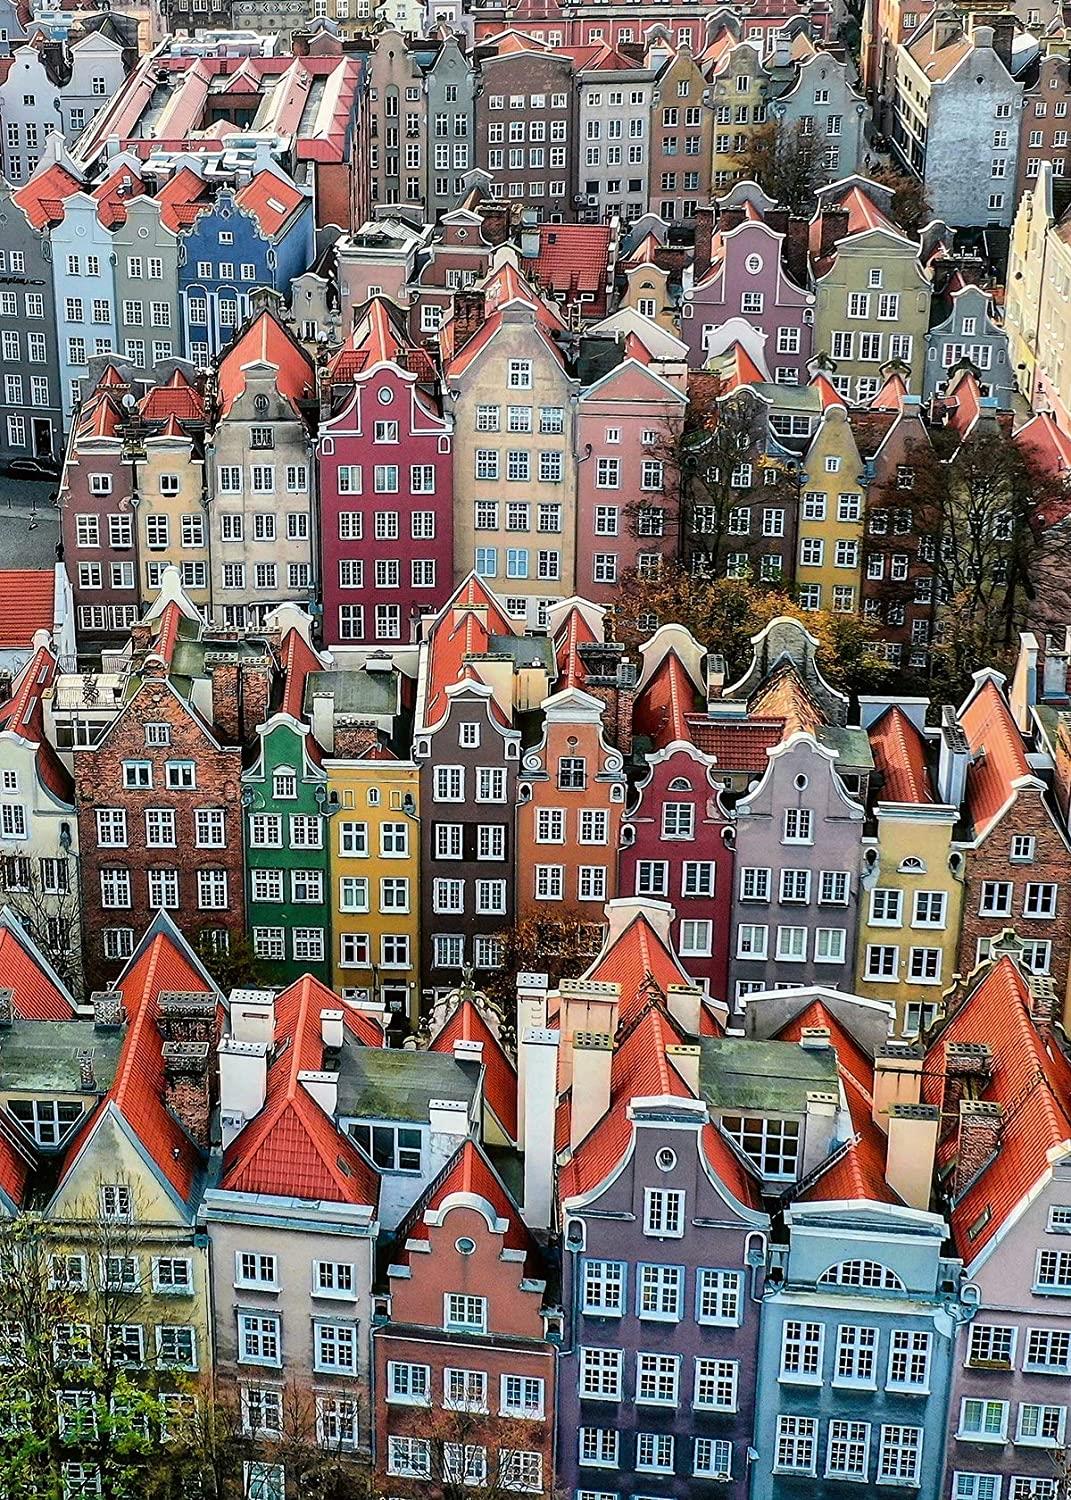 Ravensburger Gdansk Poland Jigsaw Puzzle (1000 Pieces)